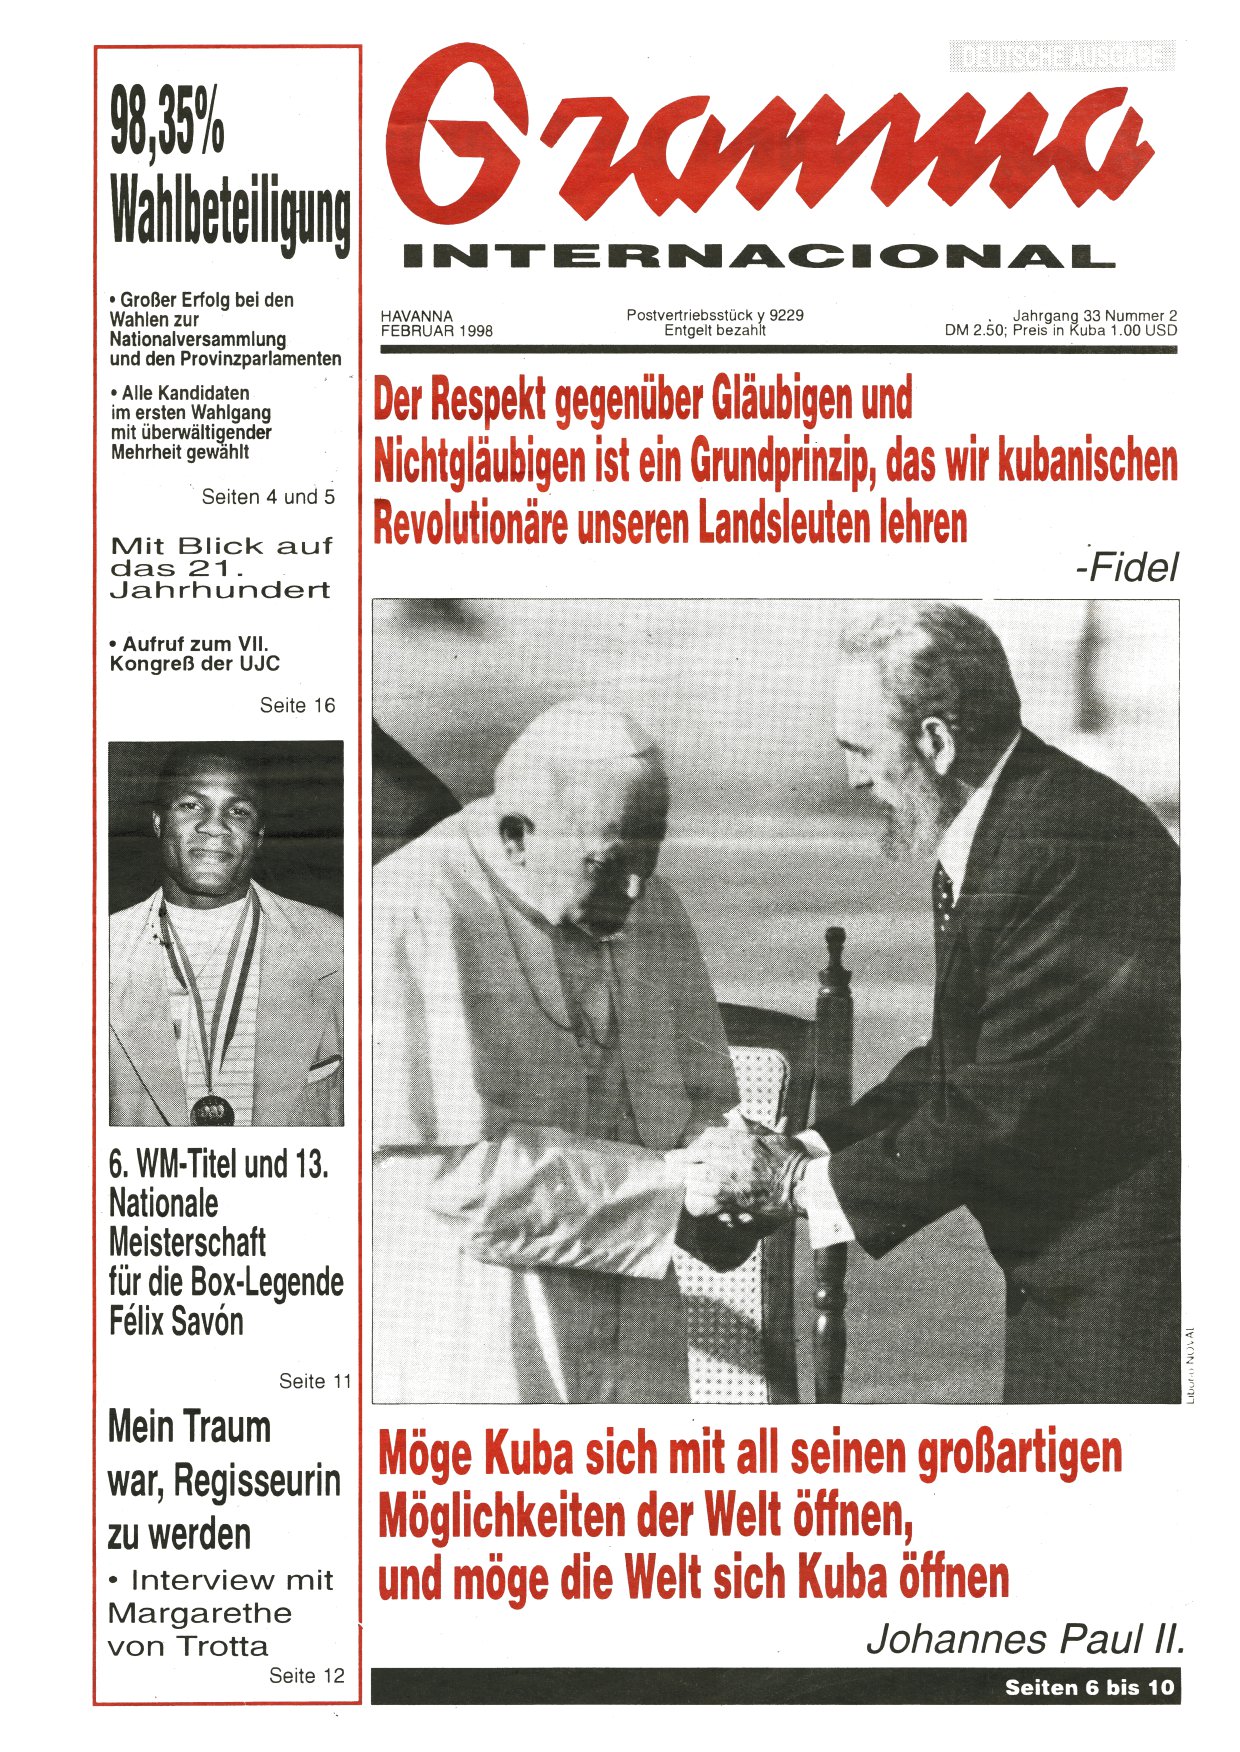 Granma Internacional Februar 1998